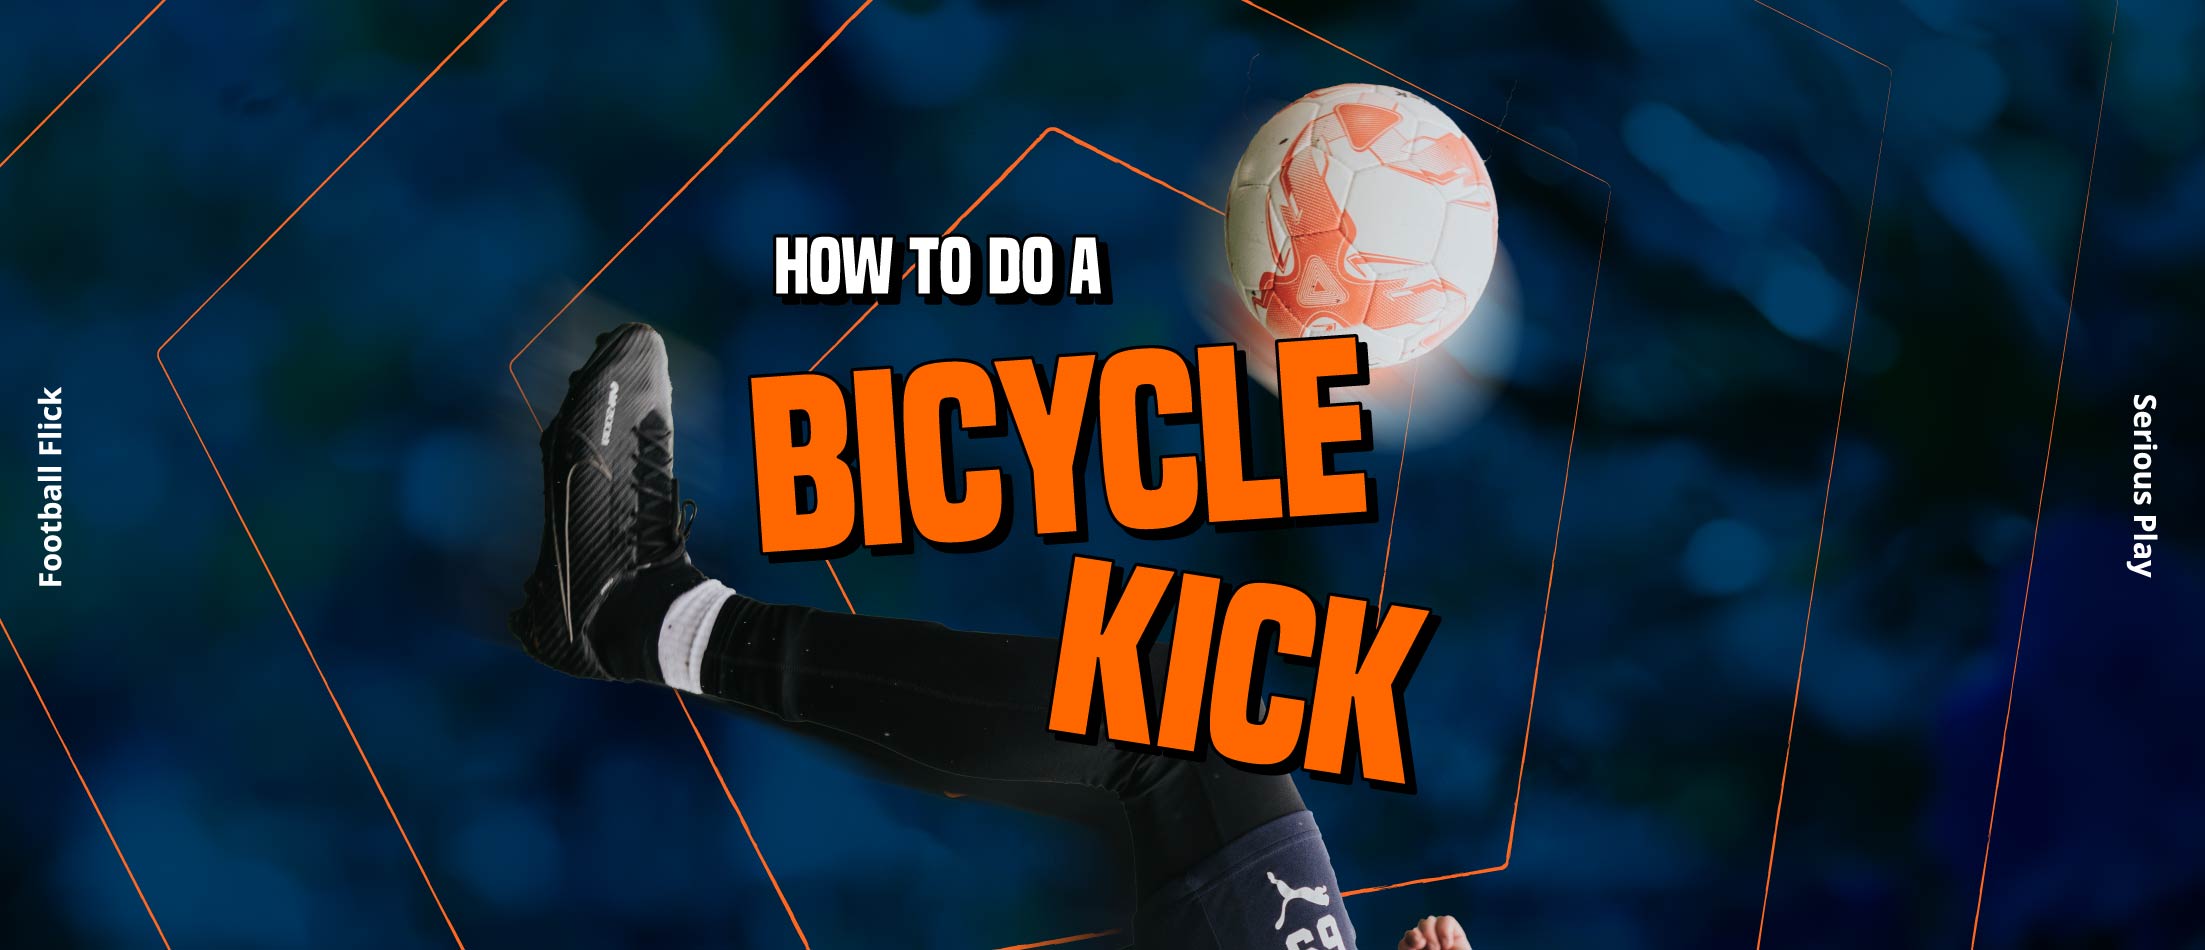 How to score an overhead kick